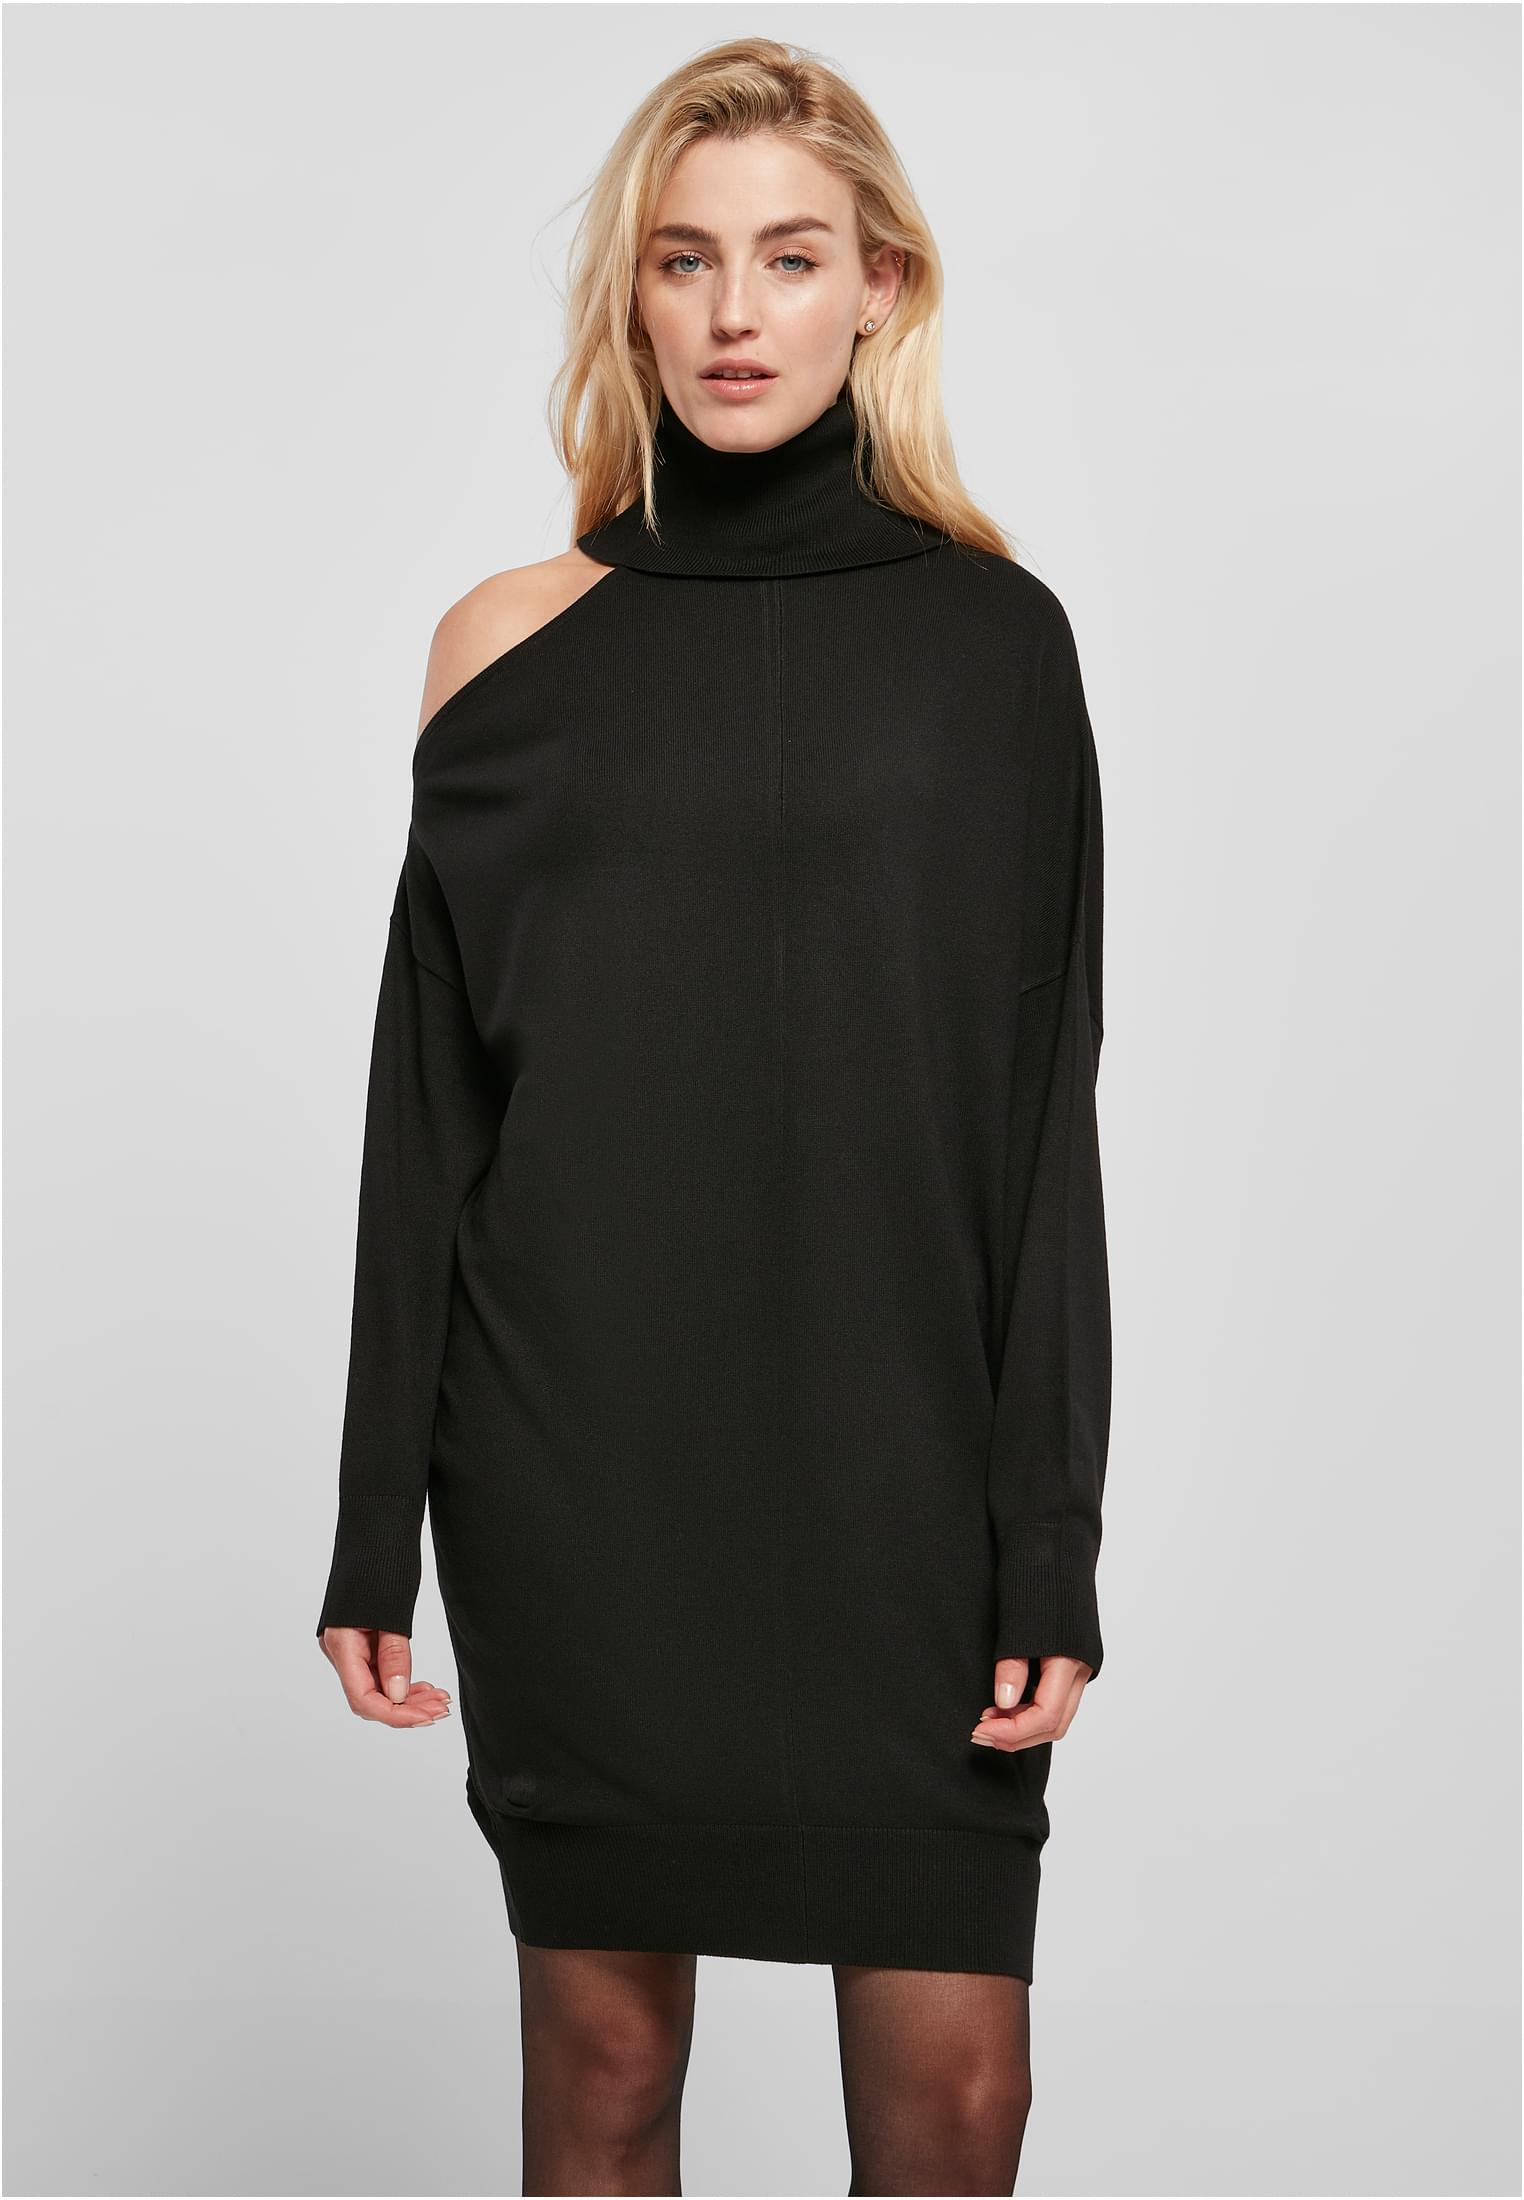 Women's knitted one-shoulder dress - black